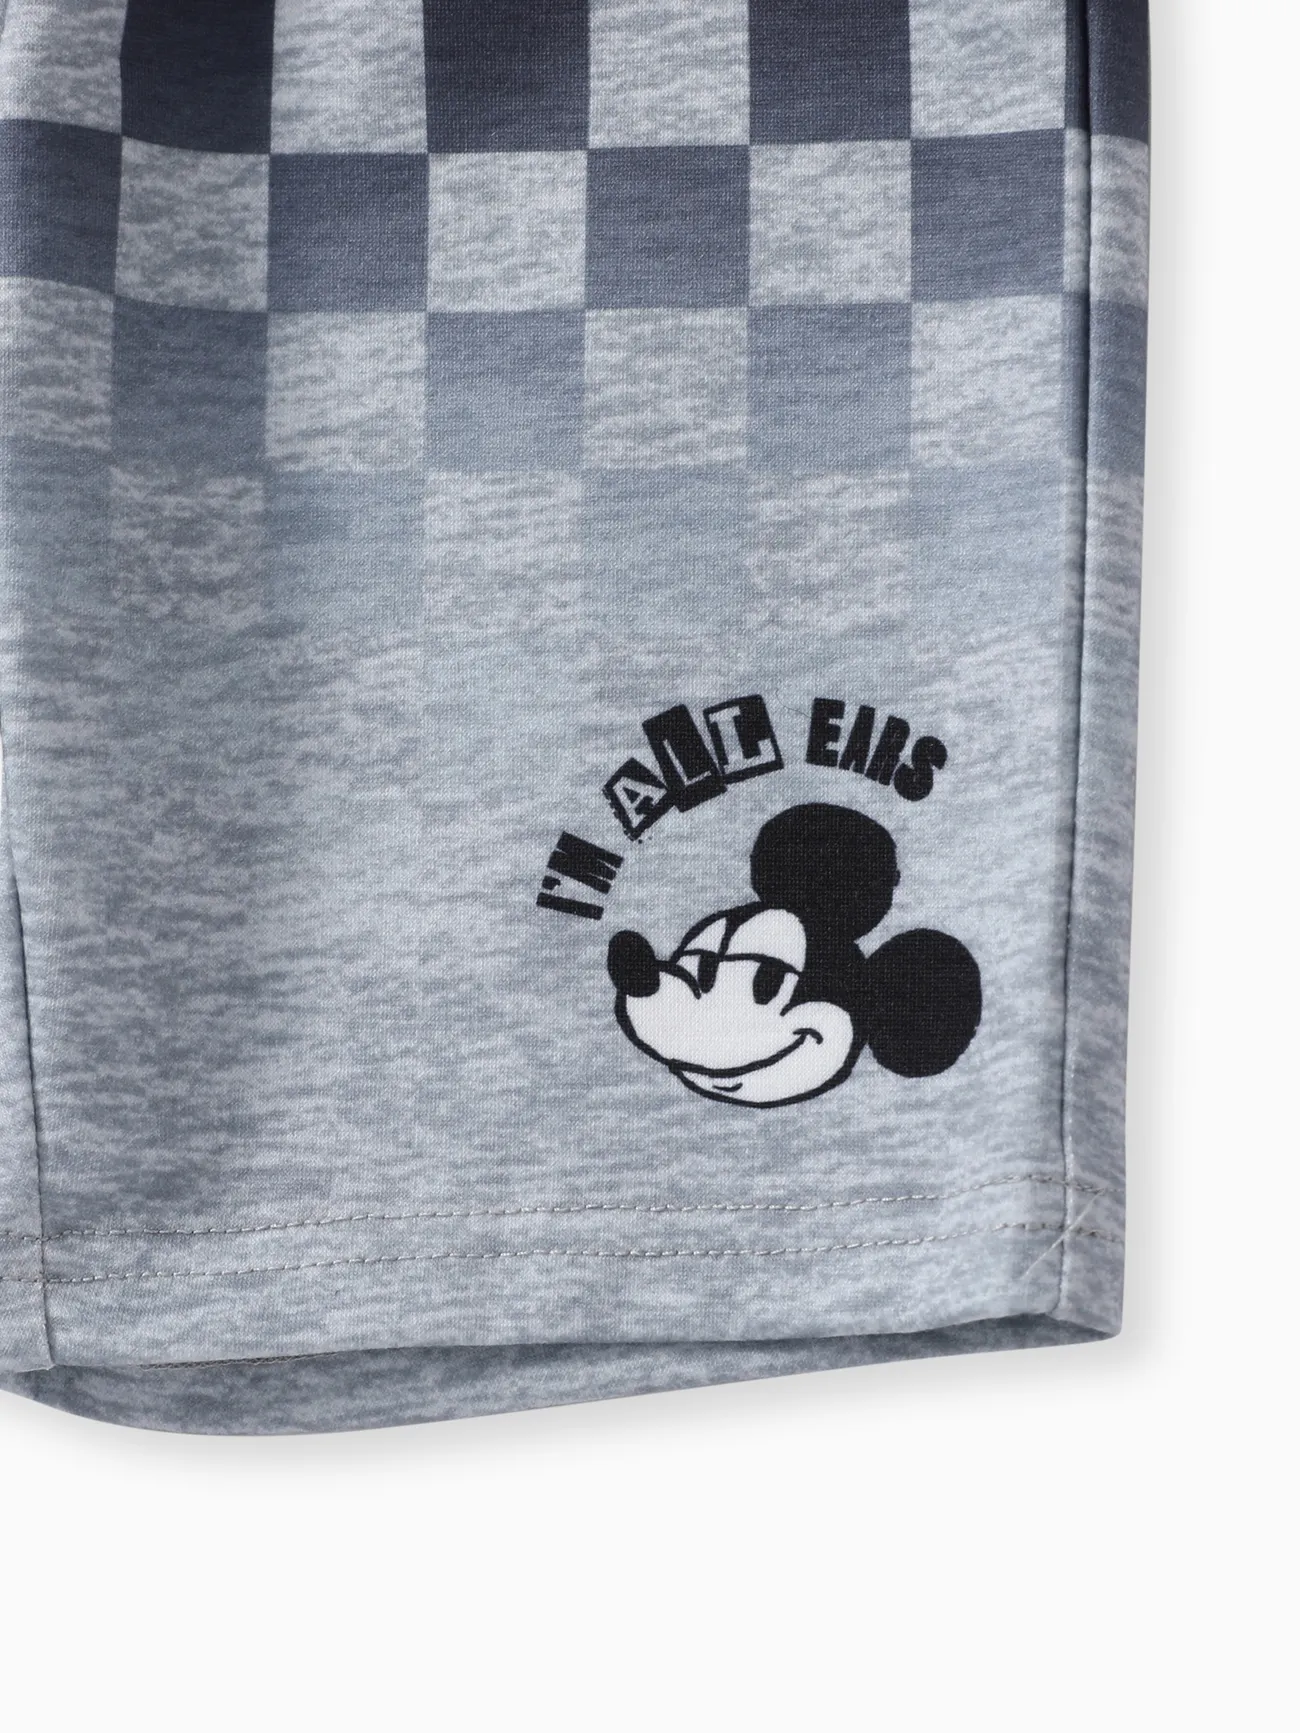 Disney Mickey and Friends Toddler/Kid Boys 2pcs Naia™ Mickey Checker Print Top with Detachable Belt Shorts Set White big image 1